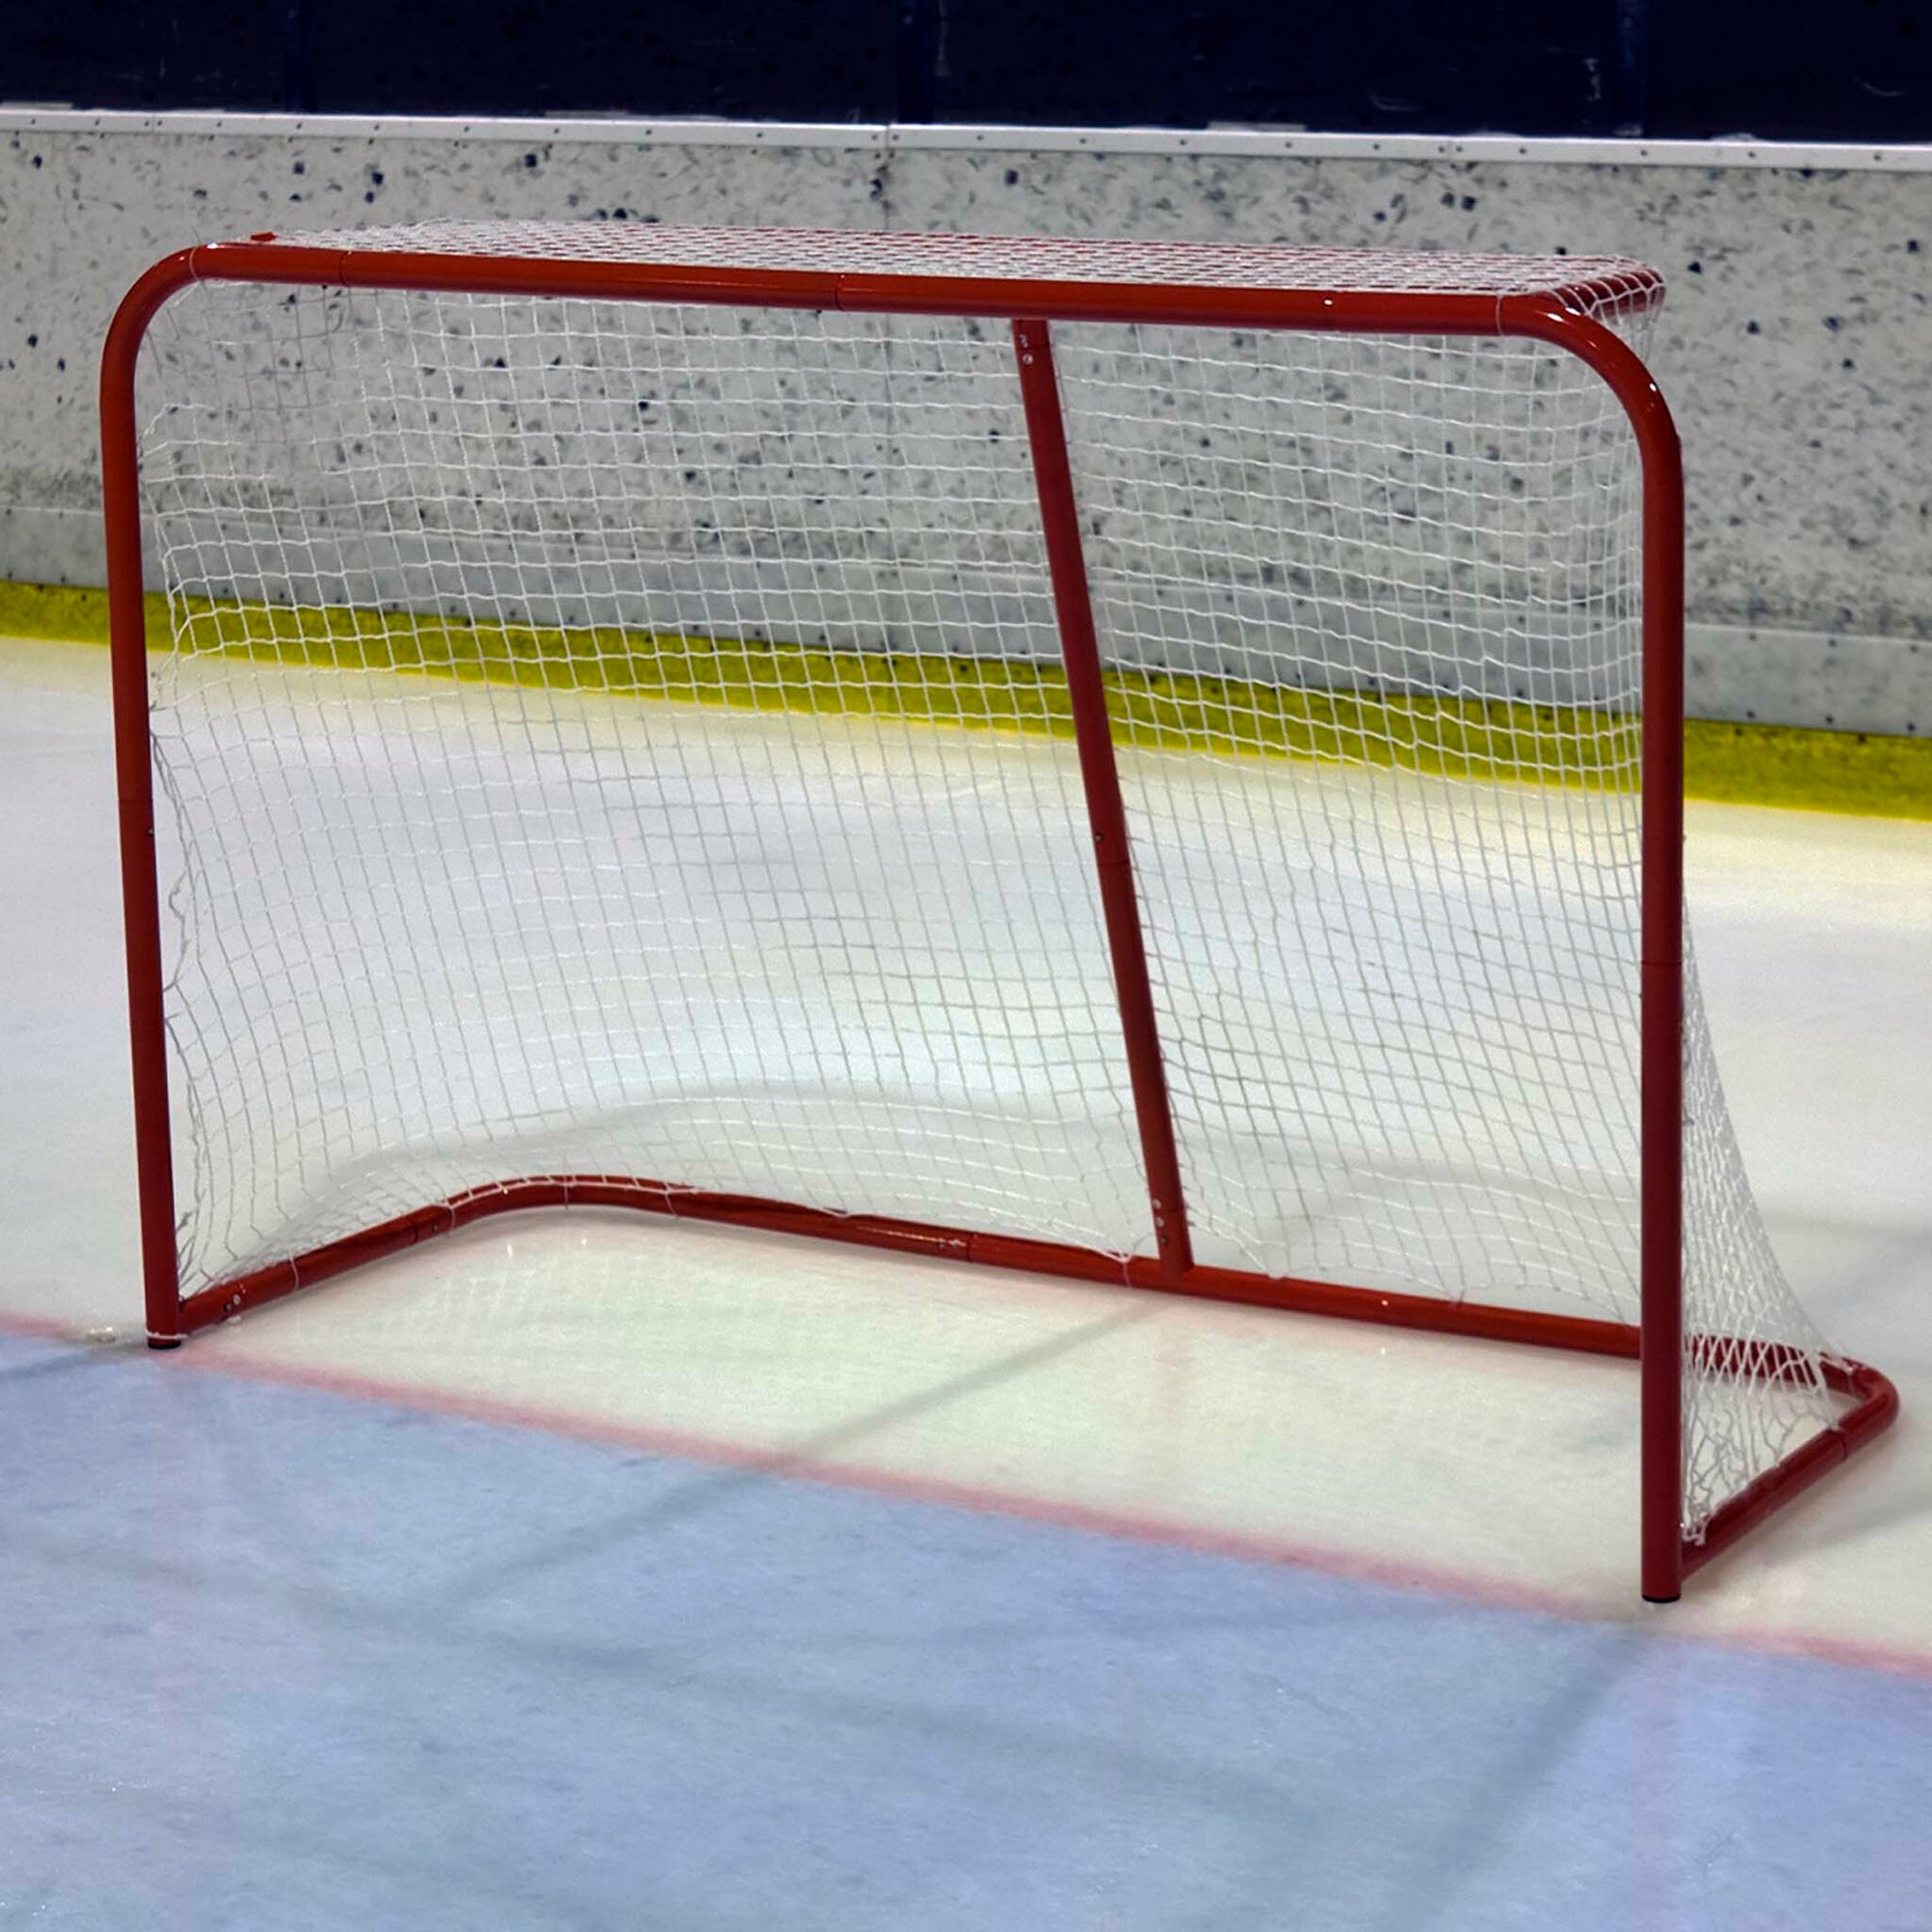 Prosport Ice Hockey Goal Official